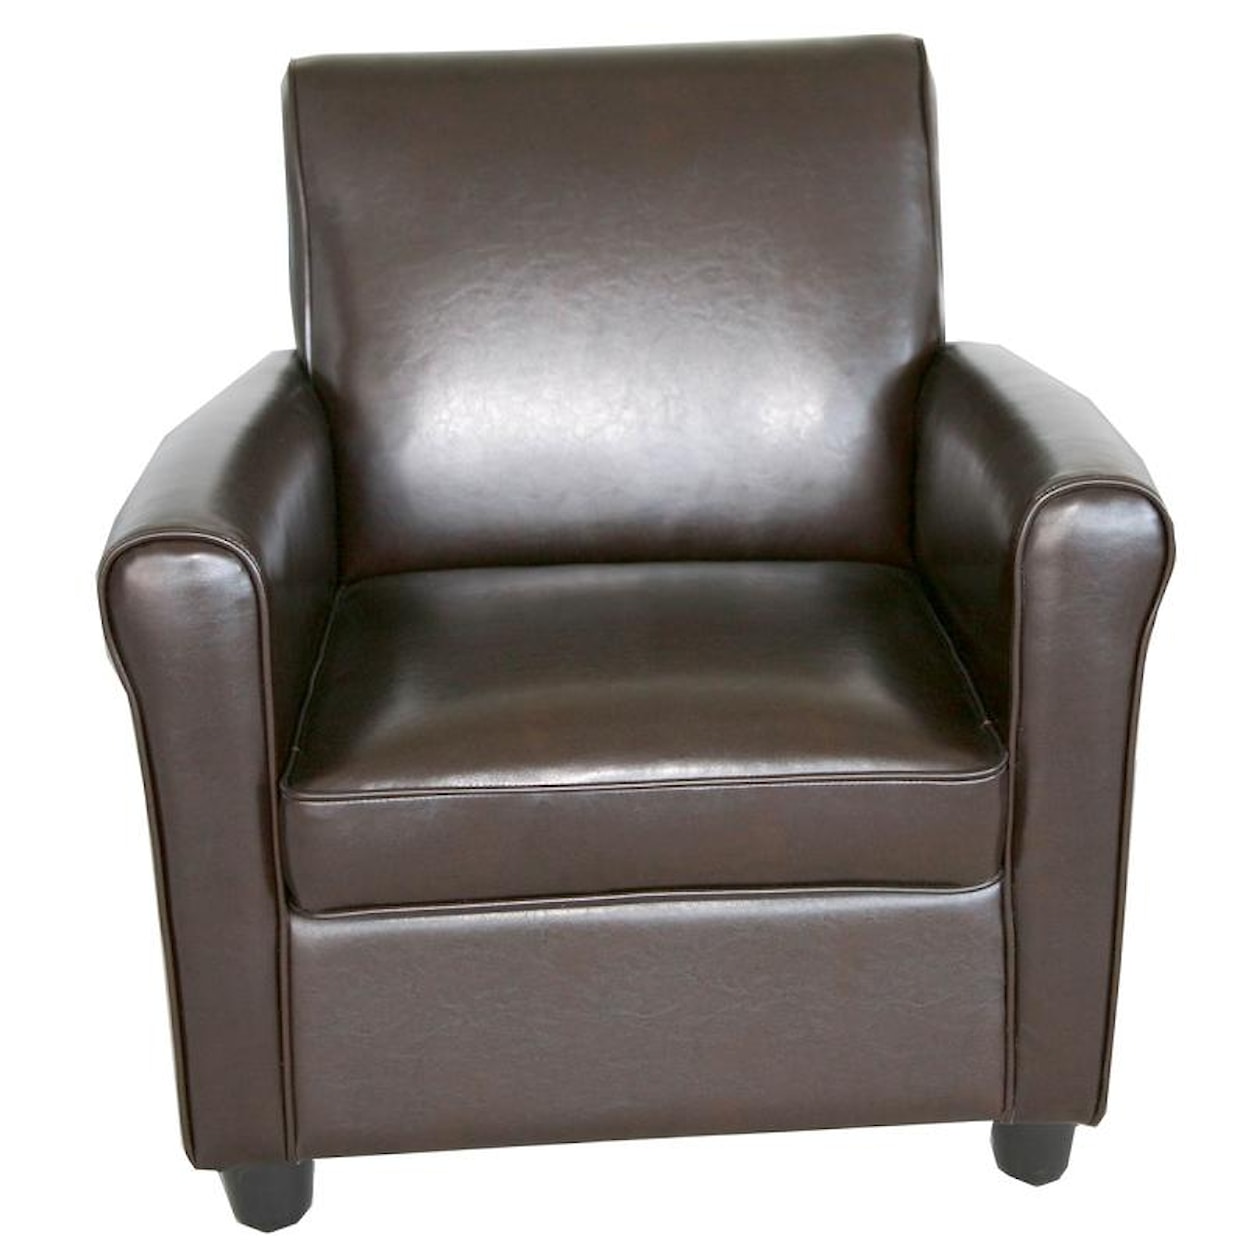 Primo International Kashmir Leather Chair